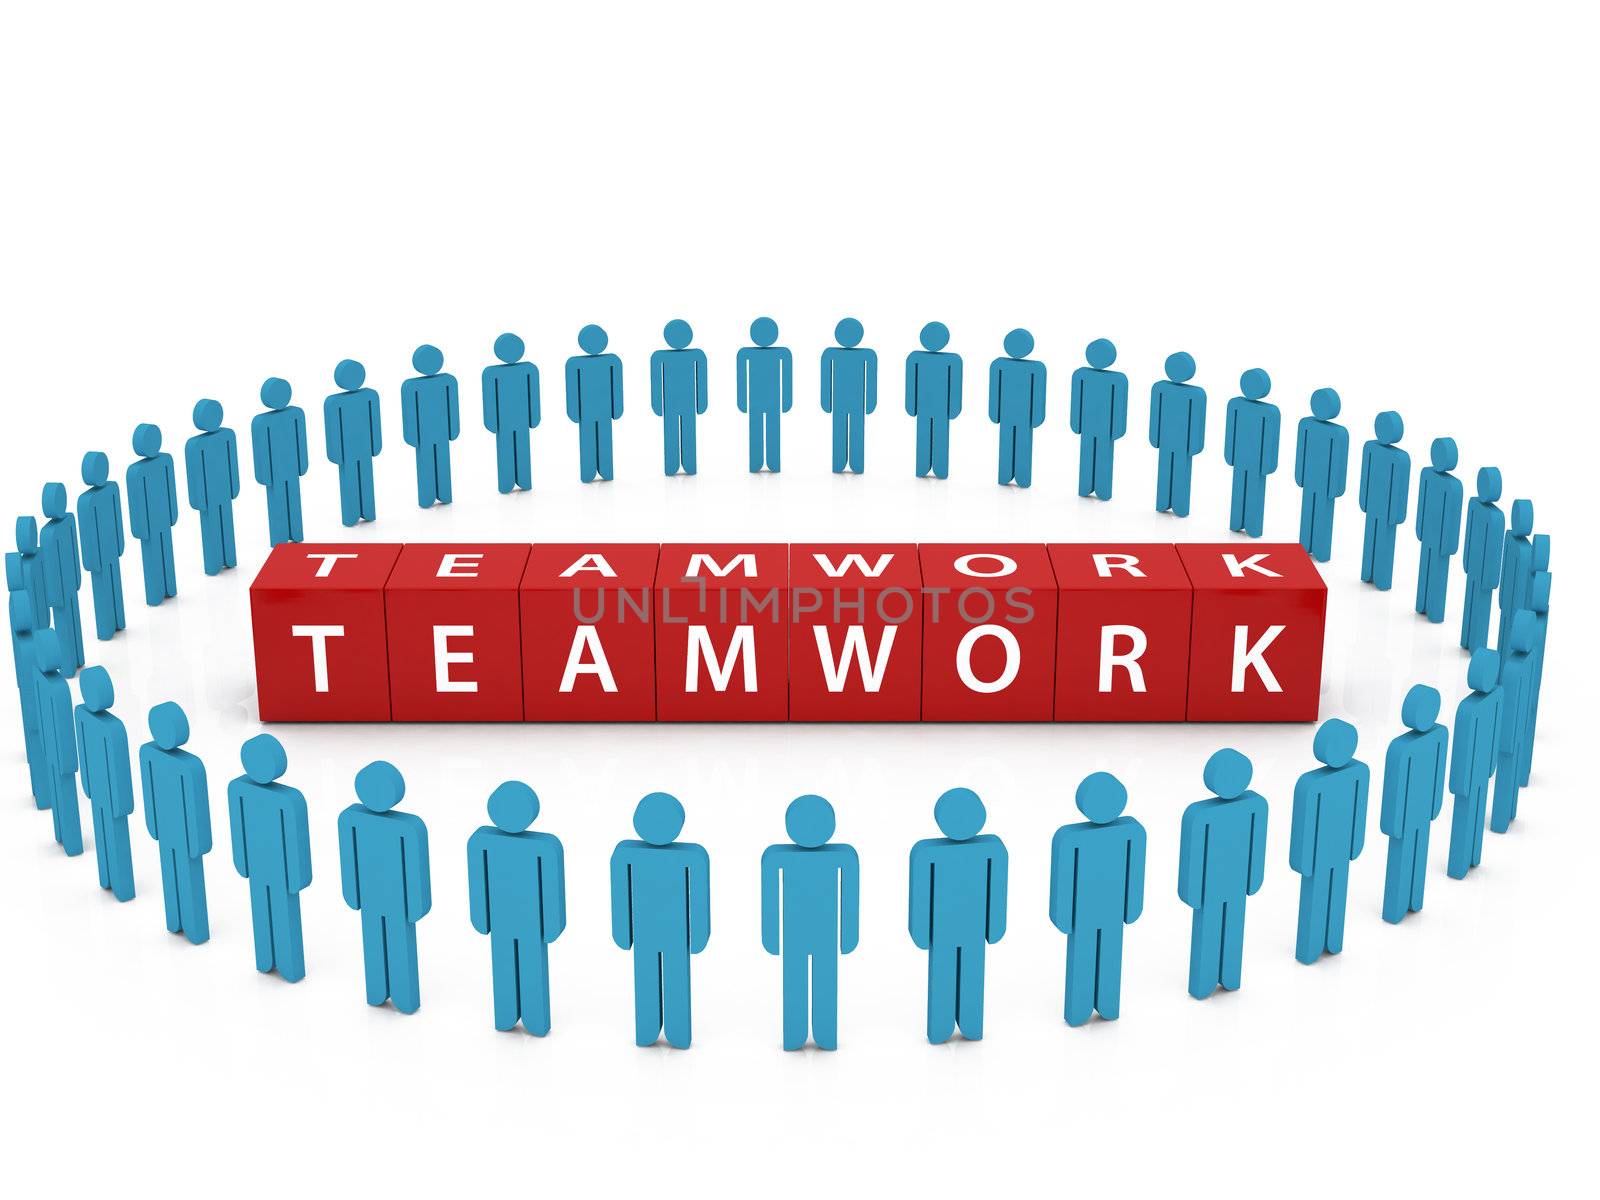 Teamwork Concept by niglaynike